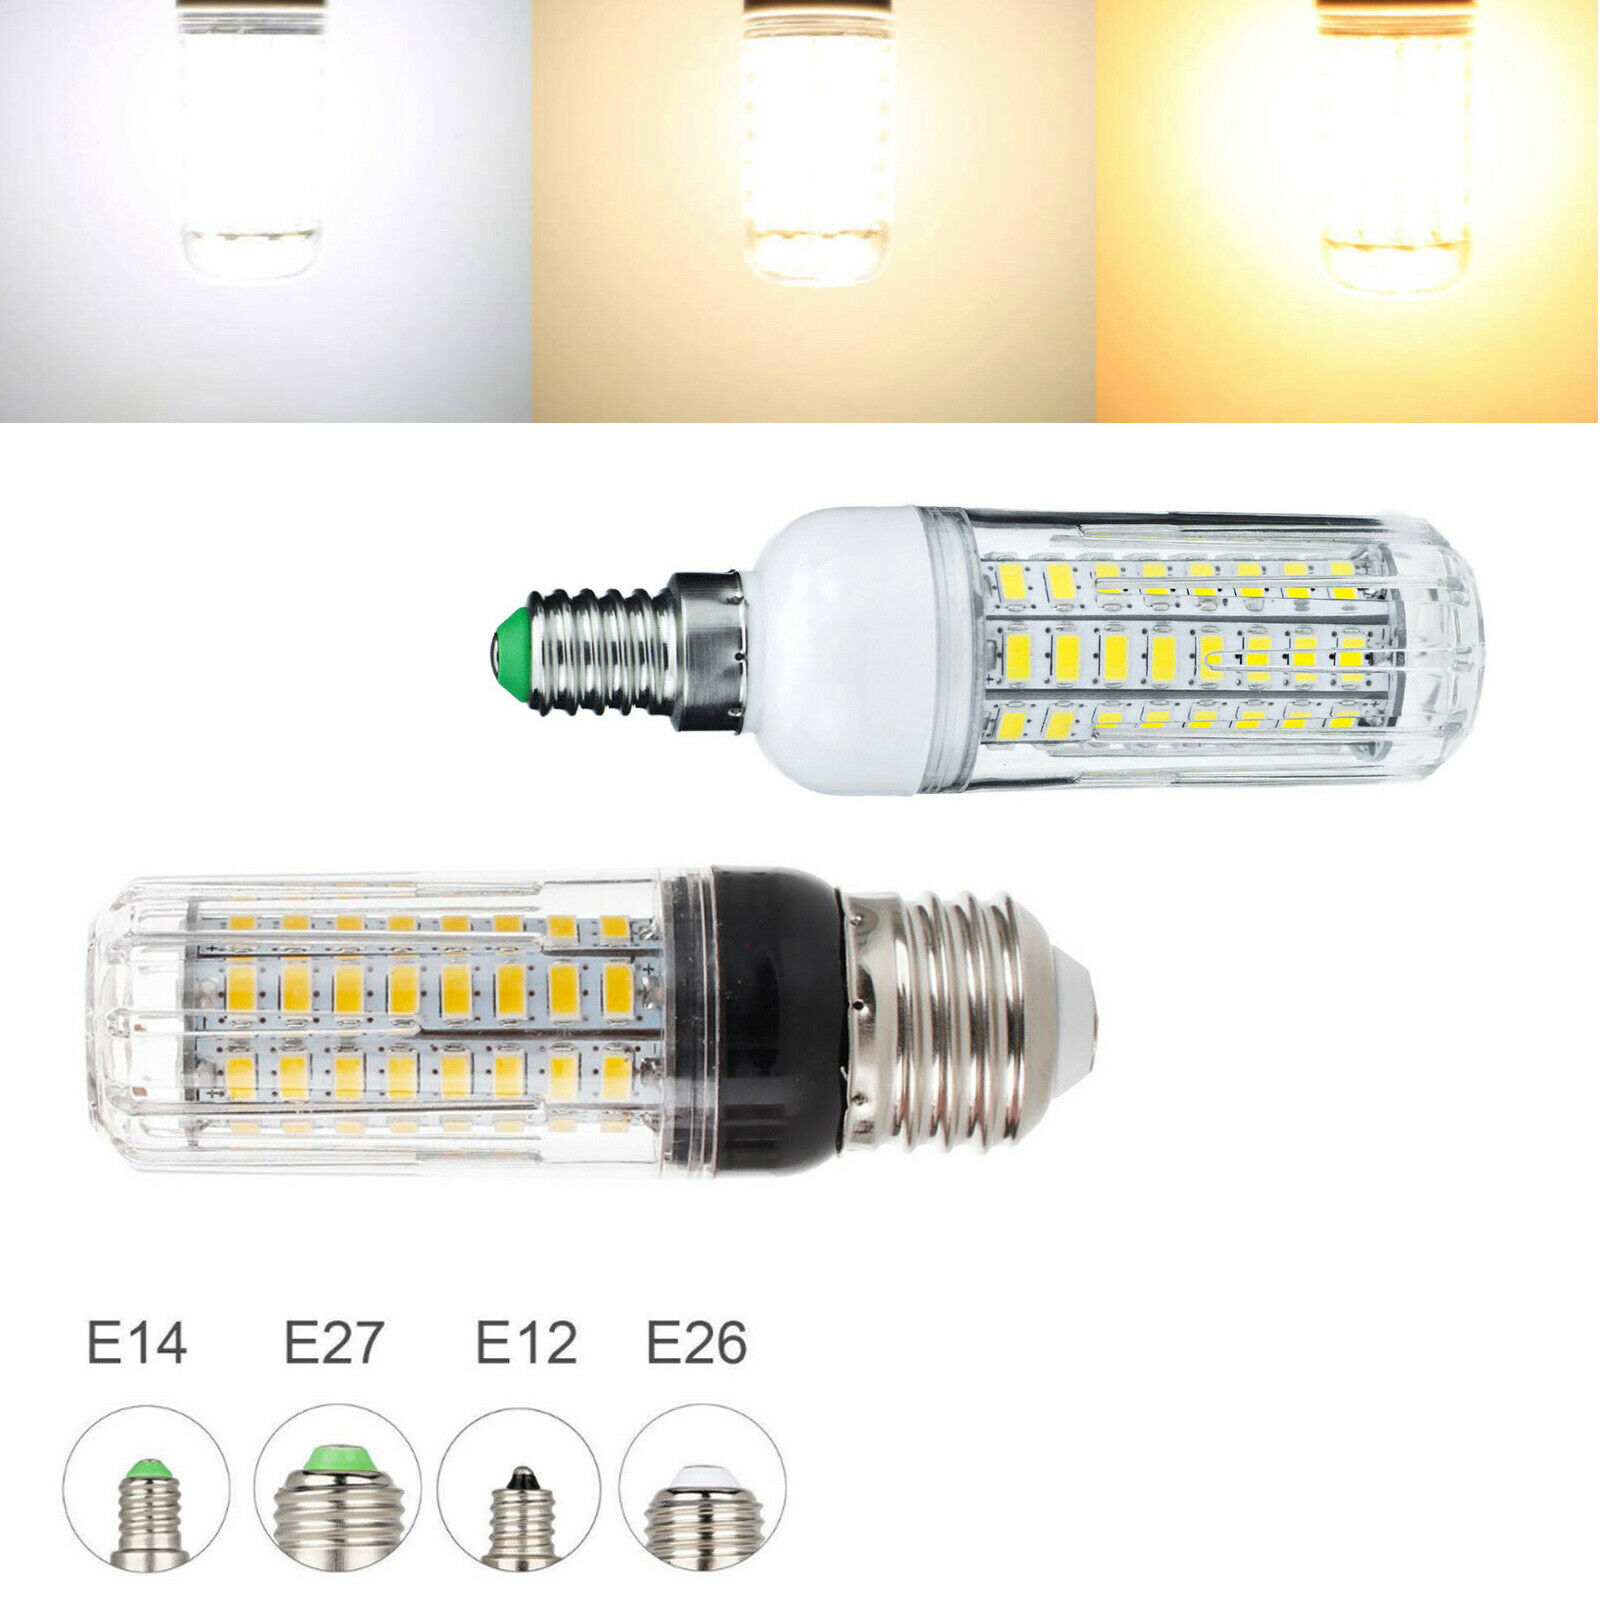 Dimmable LED Corn Light Bulb E27 B22 E14 5730 SMD 50W 100W Equivalent Lamps RH 